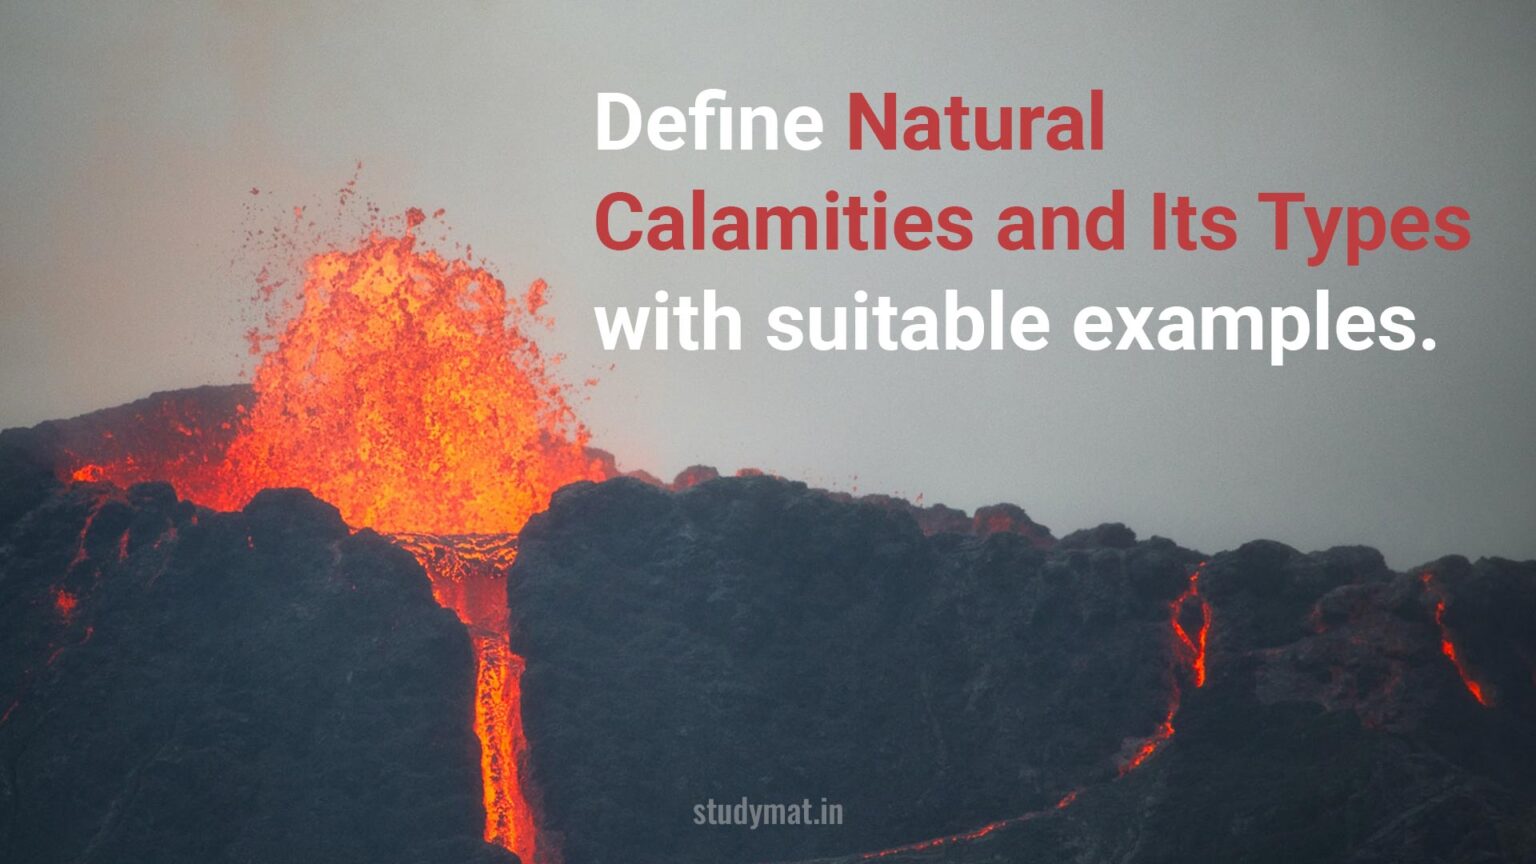 assignment about natural calamities